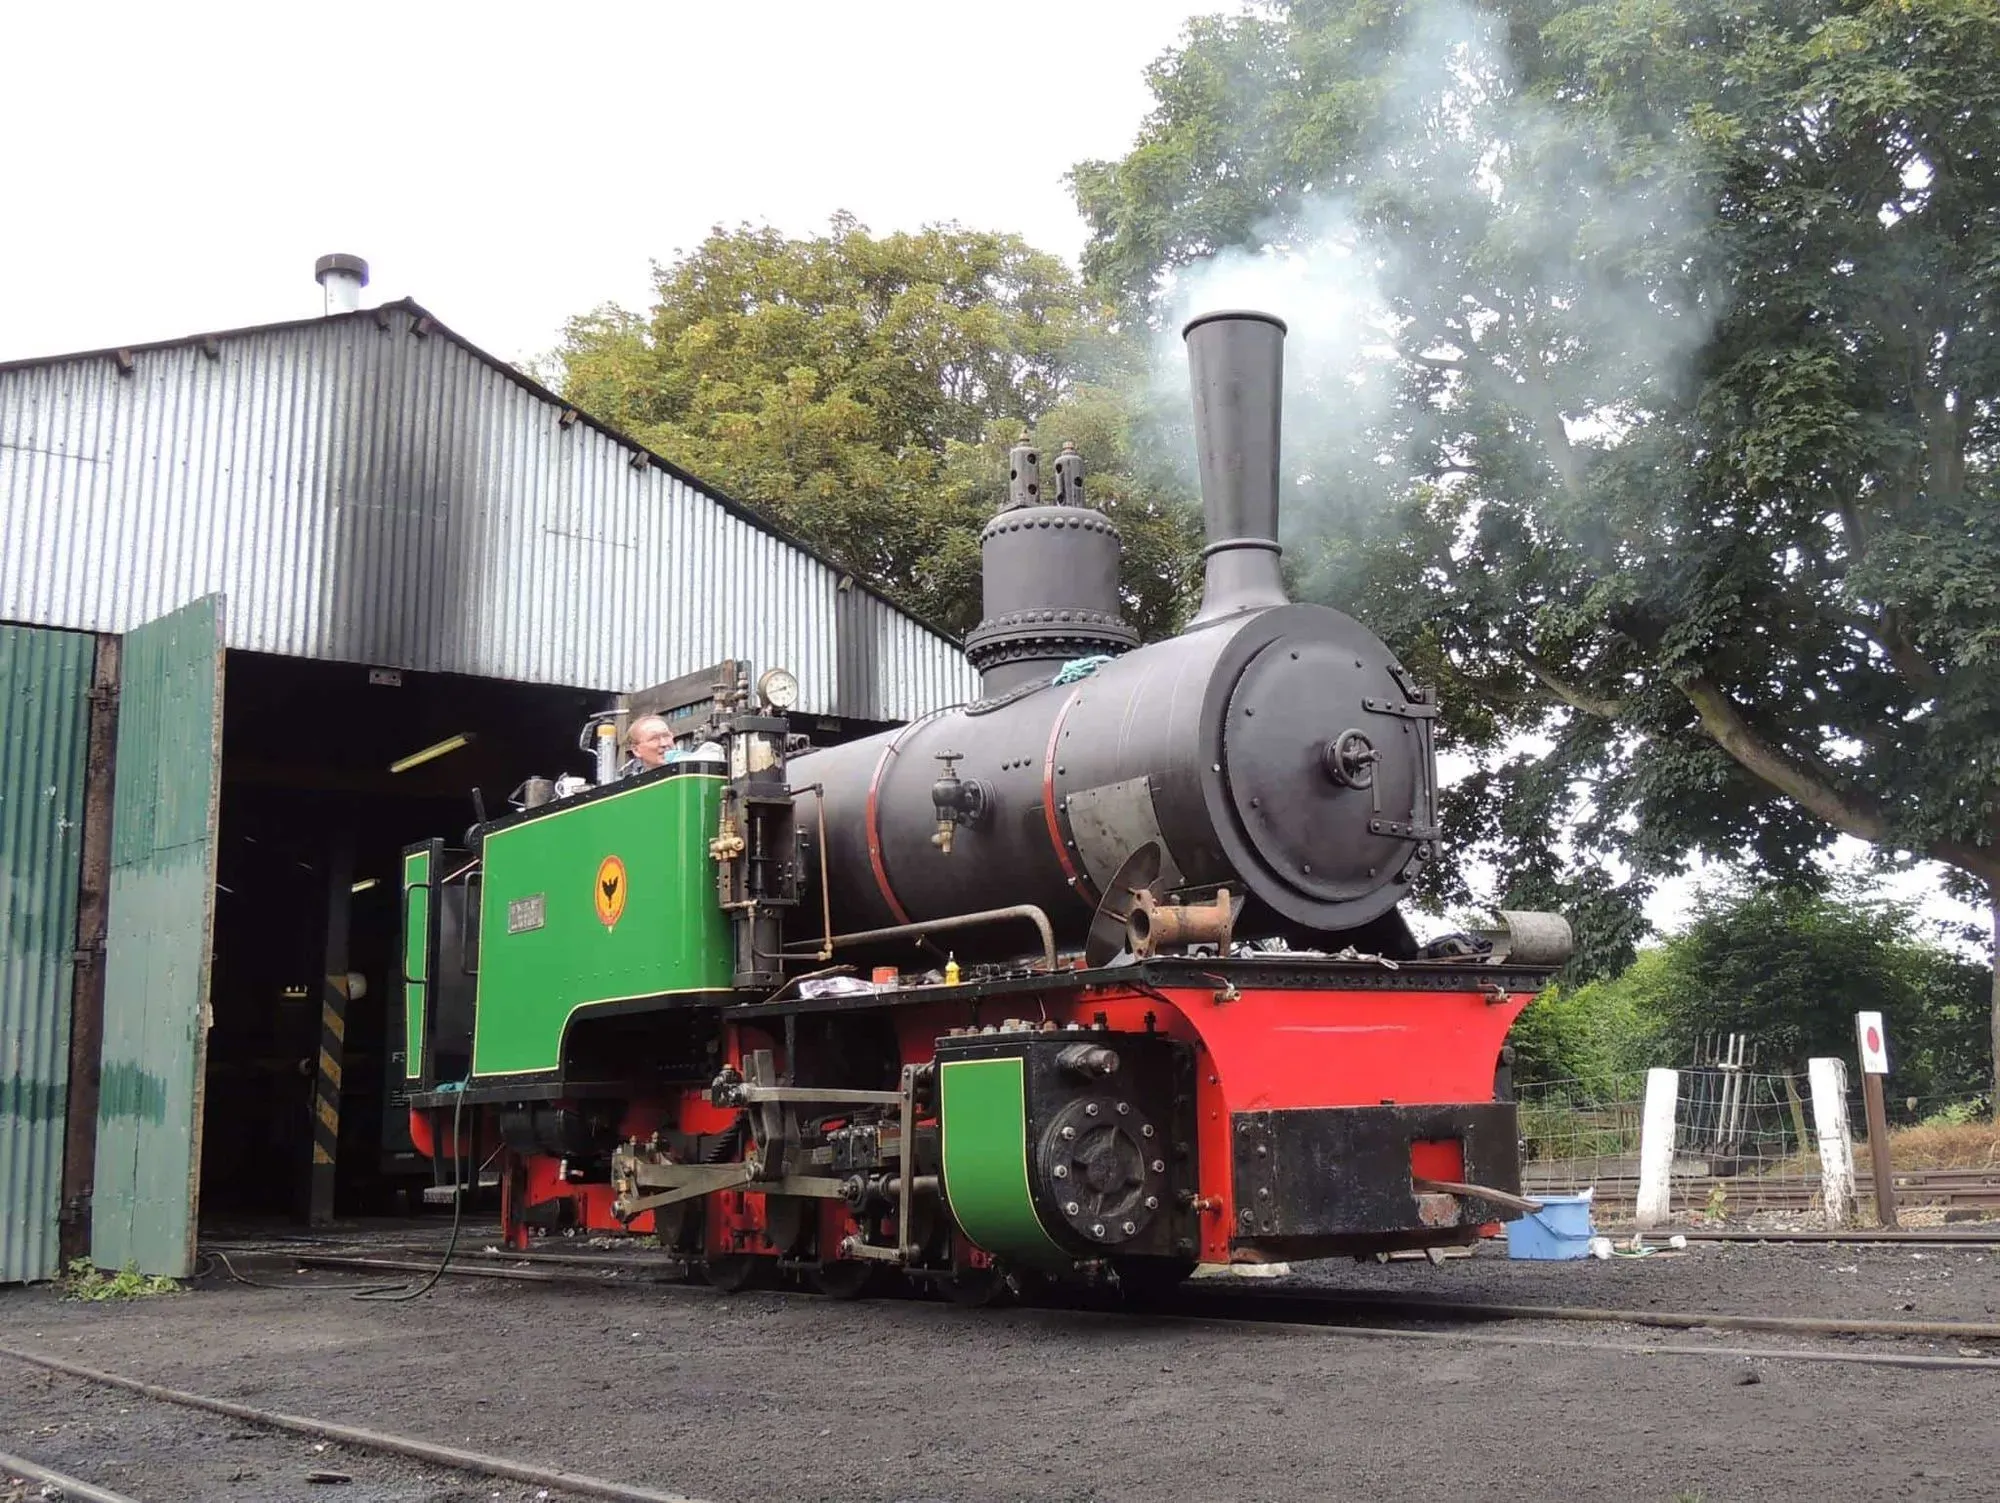 Pedemoura Engine, the largest engine at Leighton Buzzard Railway.